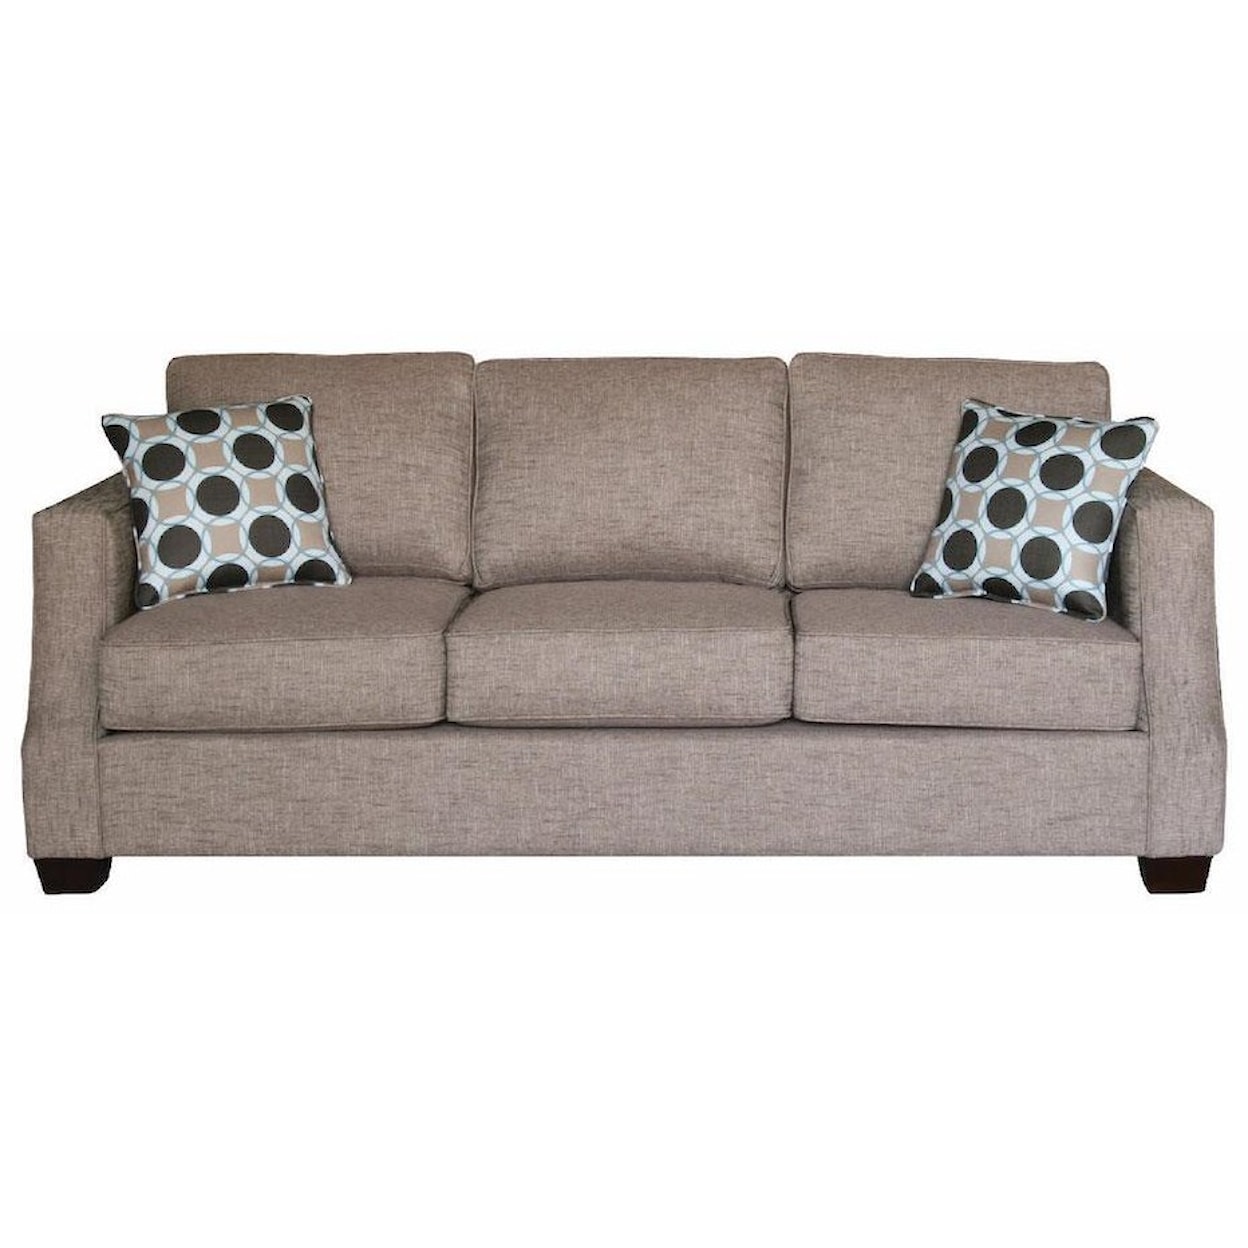 Sussex Upholstery Co. Luke 3 Cushion Sofa